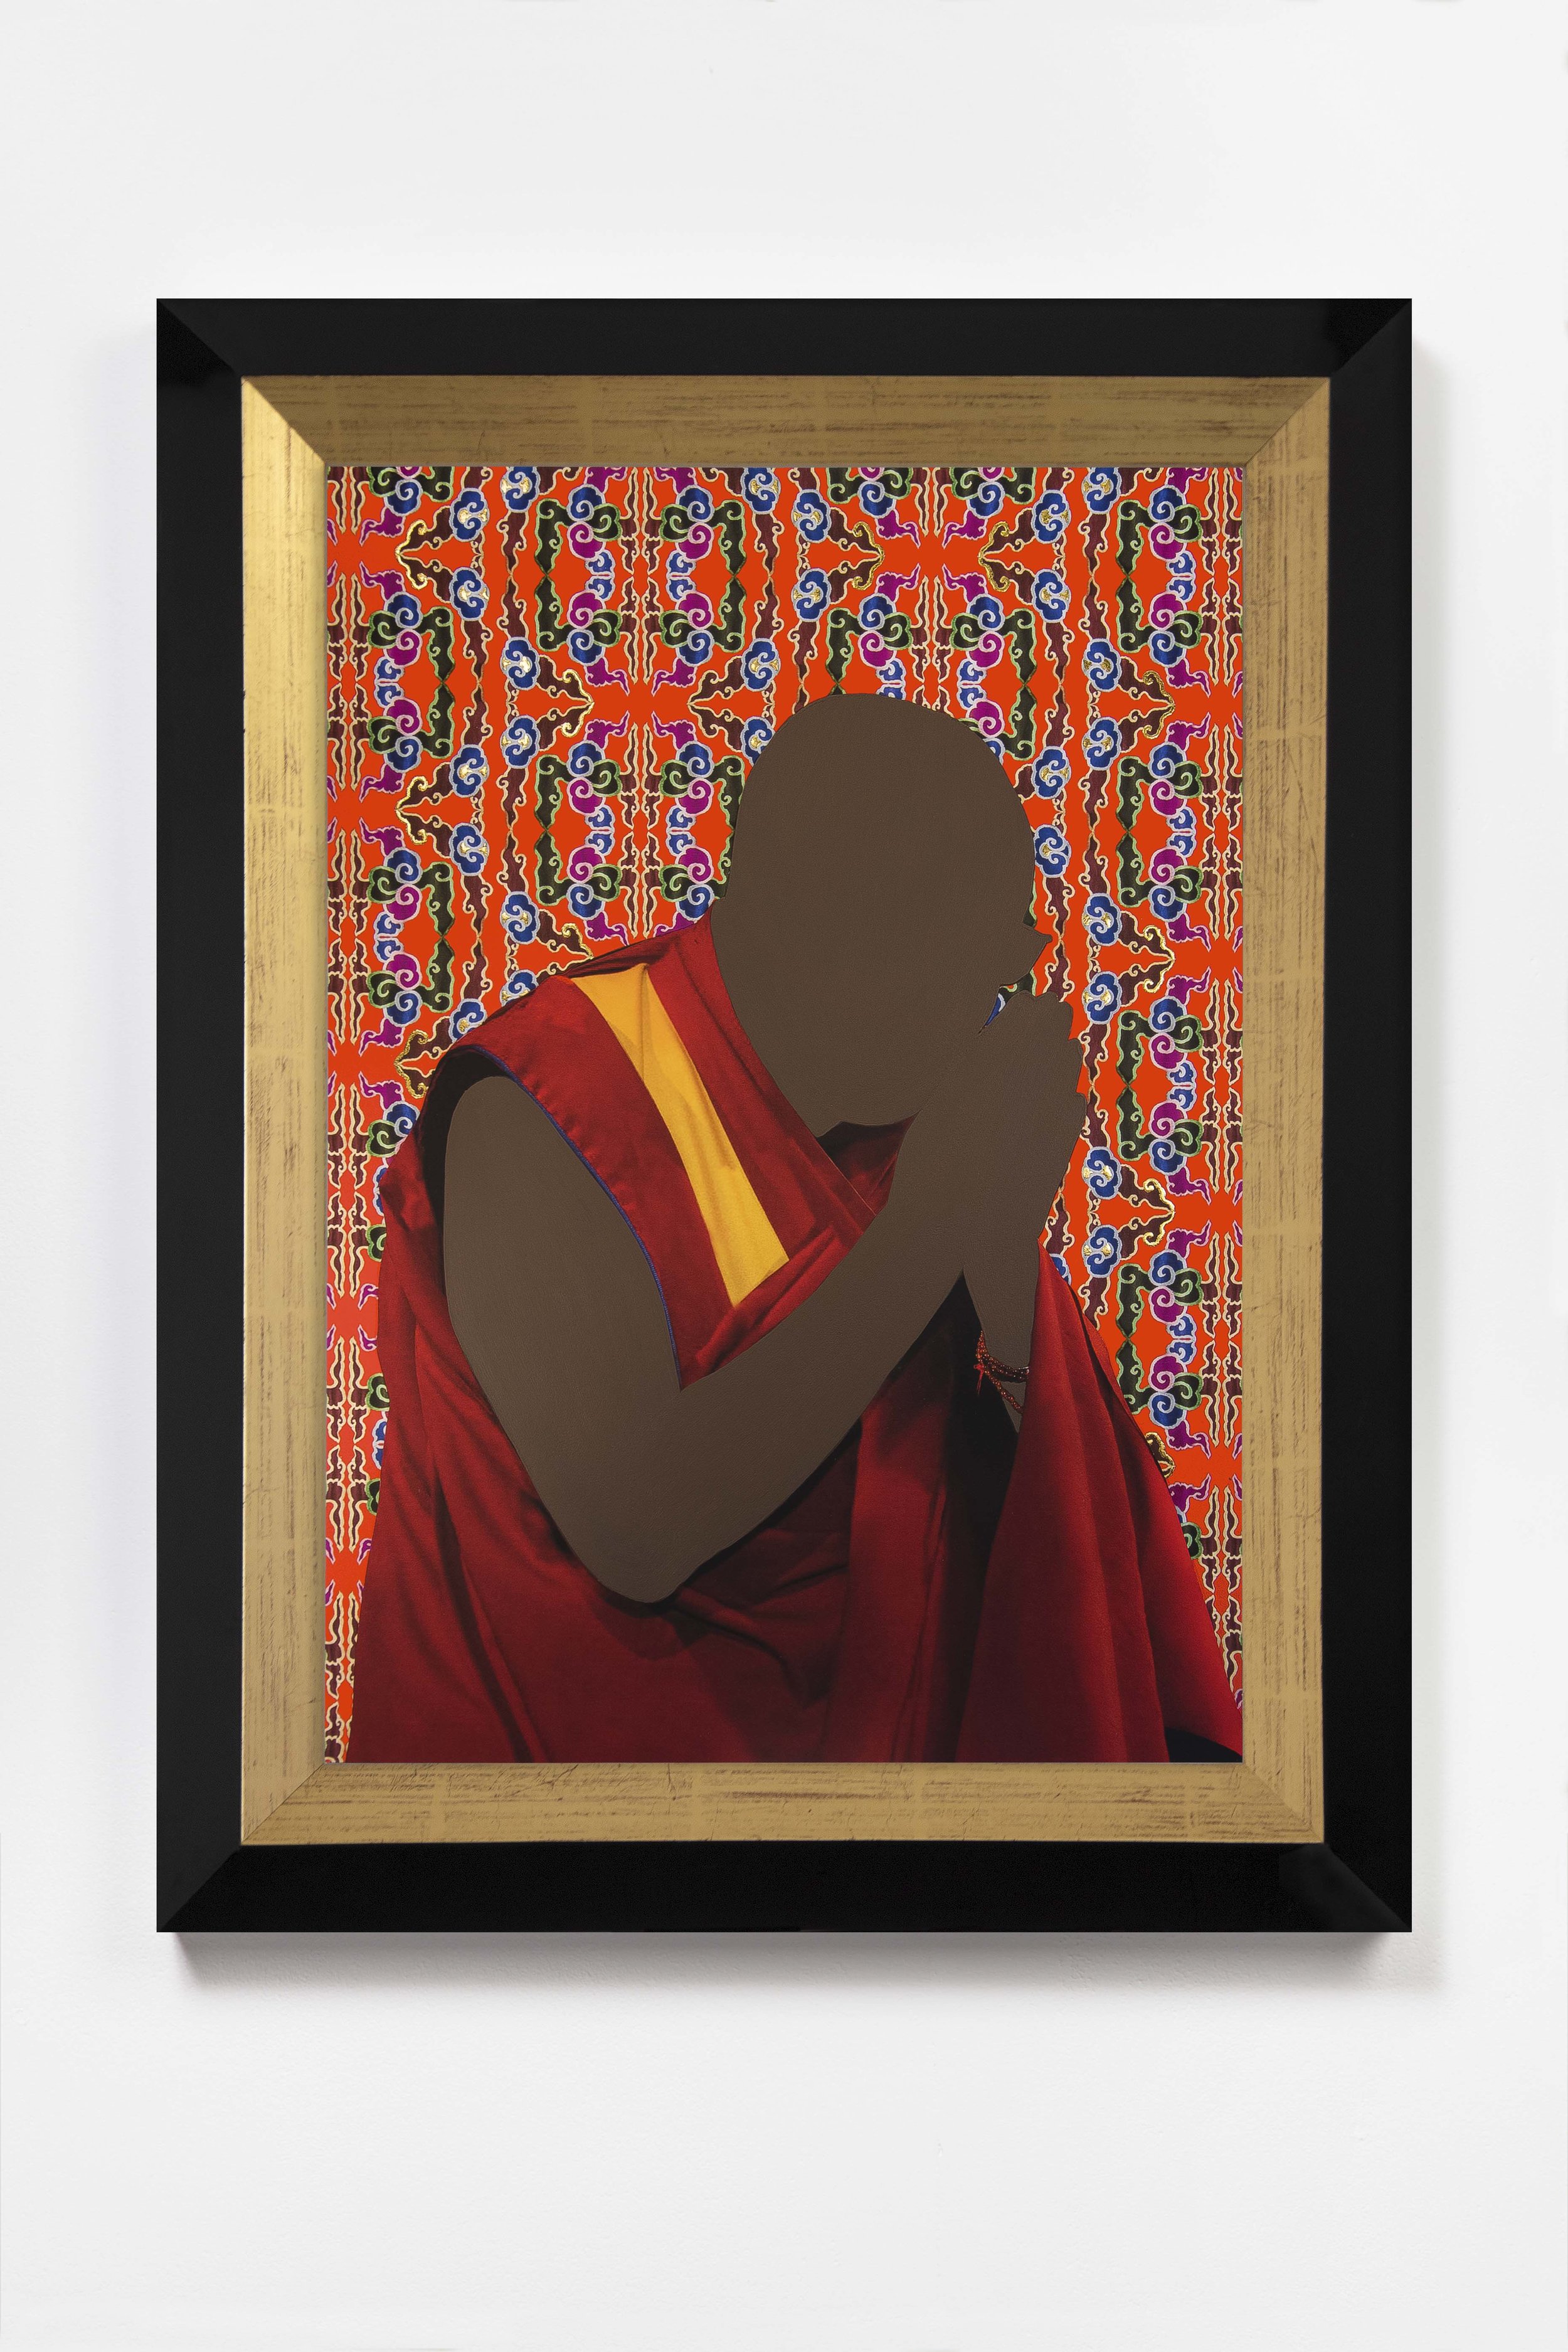 Portraits Framed Final_Dalai Lama.jpg